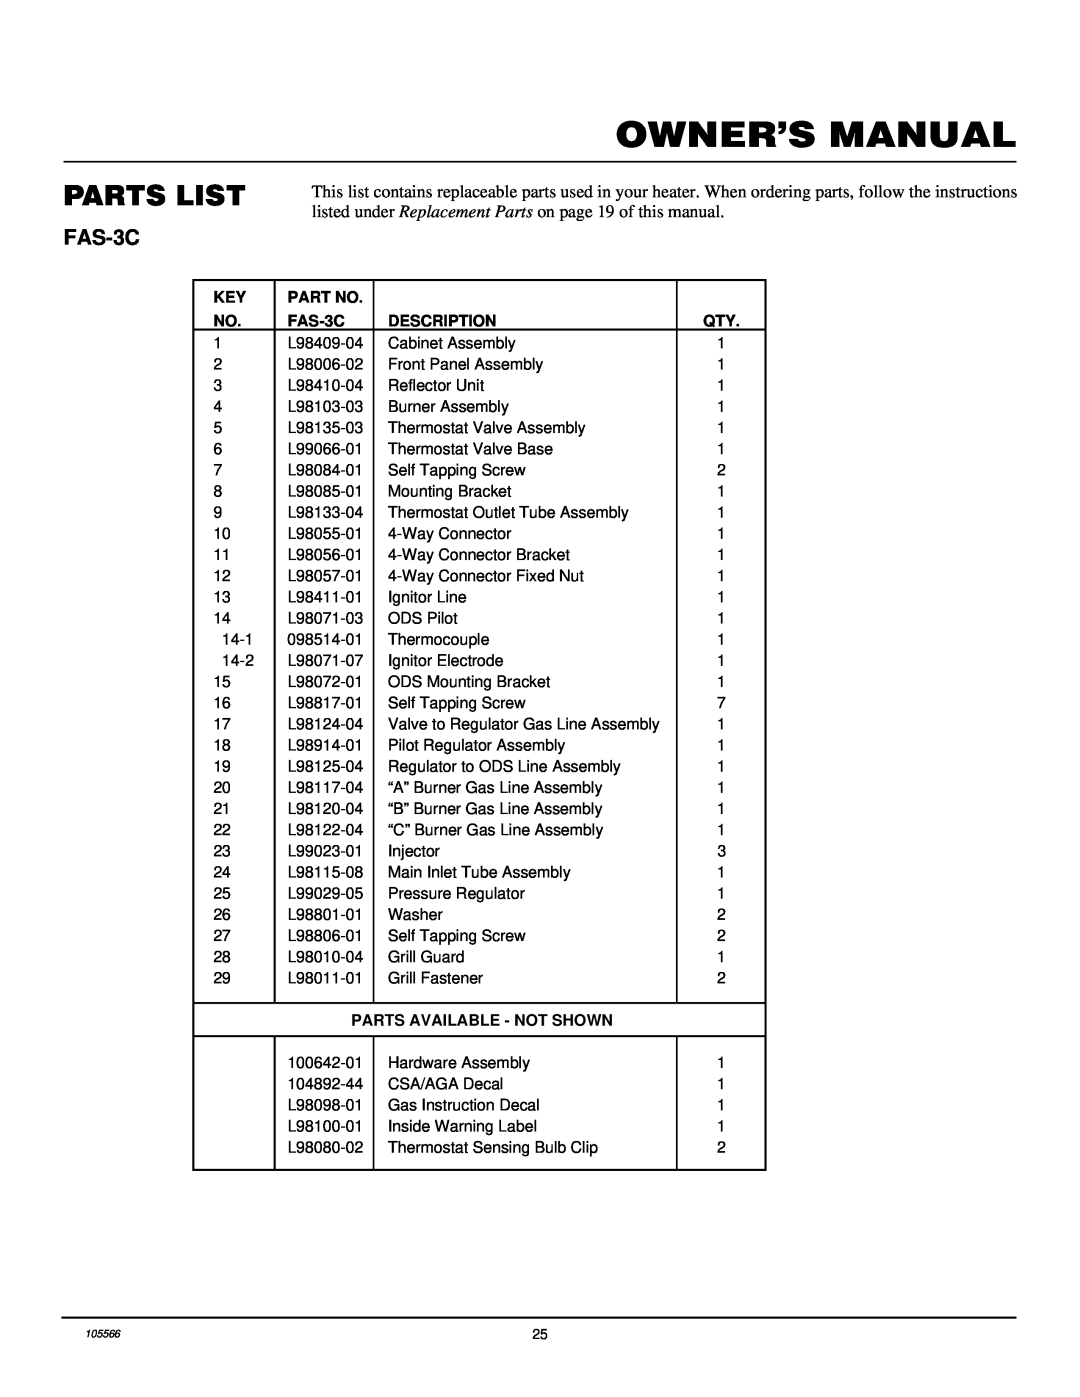 Desa FA-3B, FA-5B, FAS-5C installation manual Parts List, FAS-3C, Description, Parts Available - Not Shown 